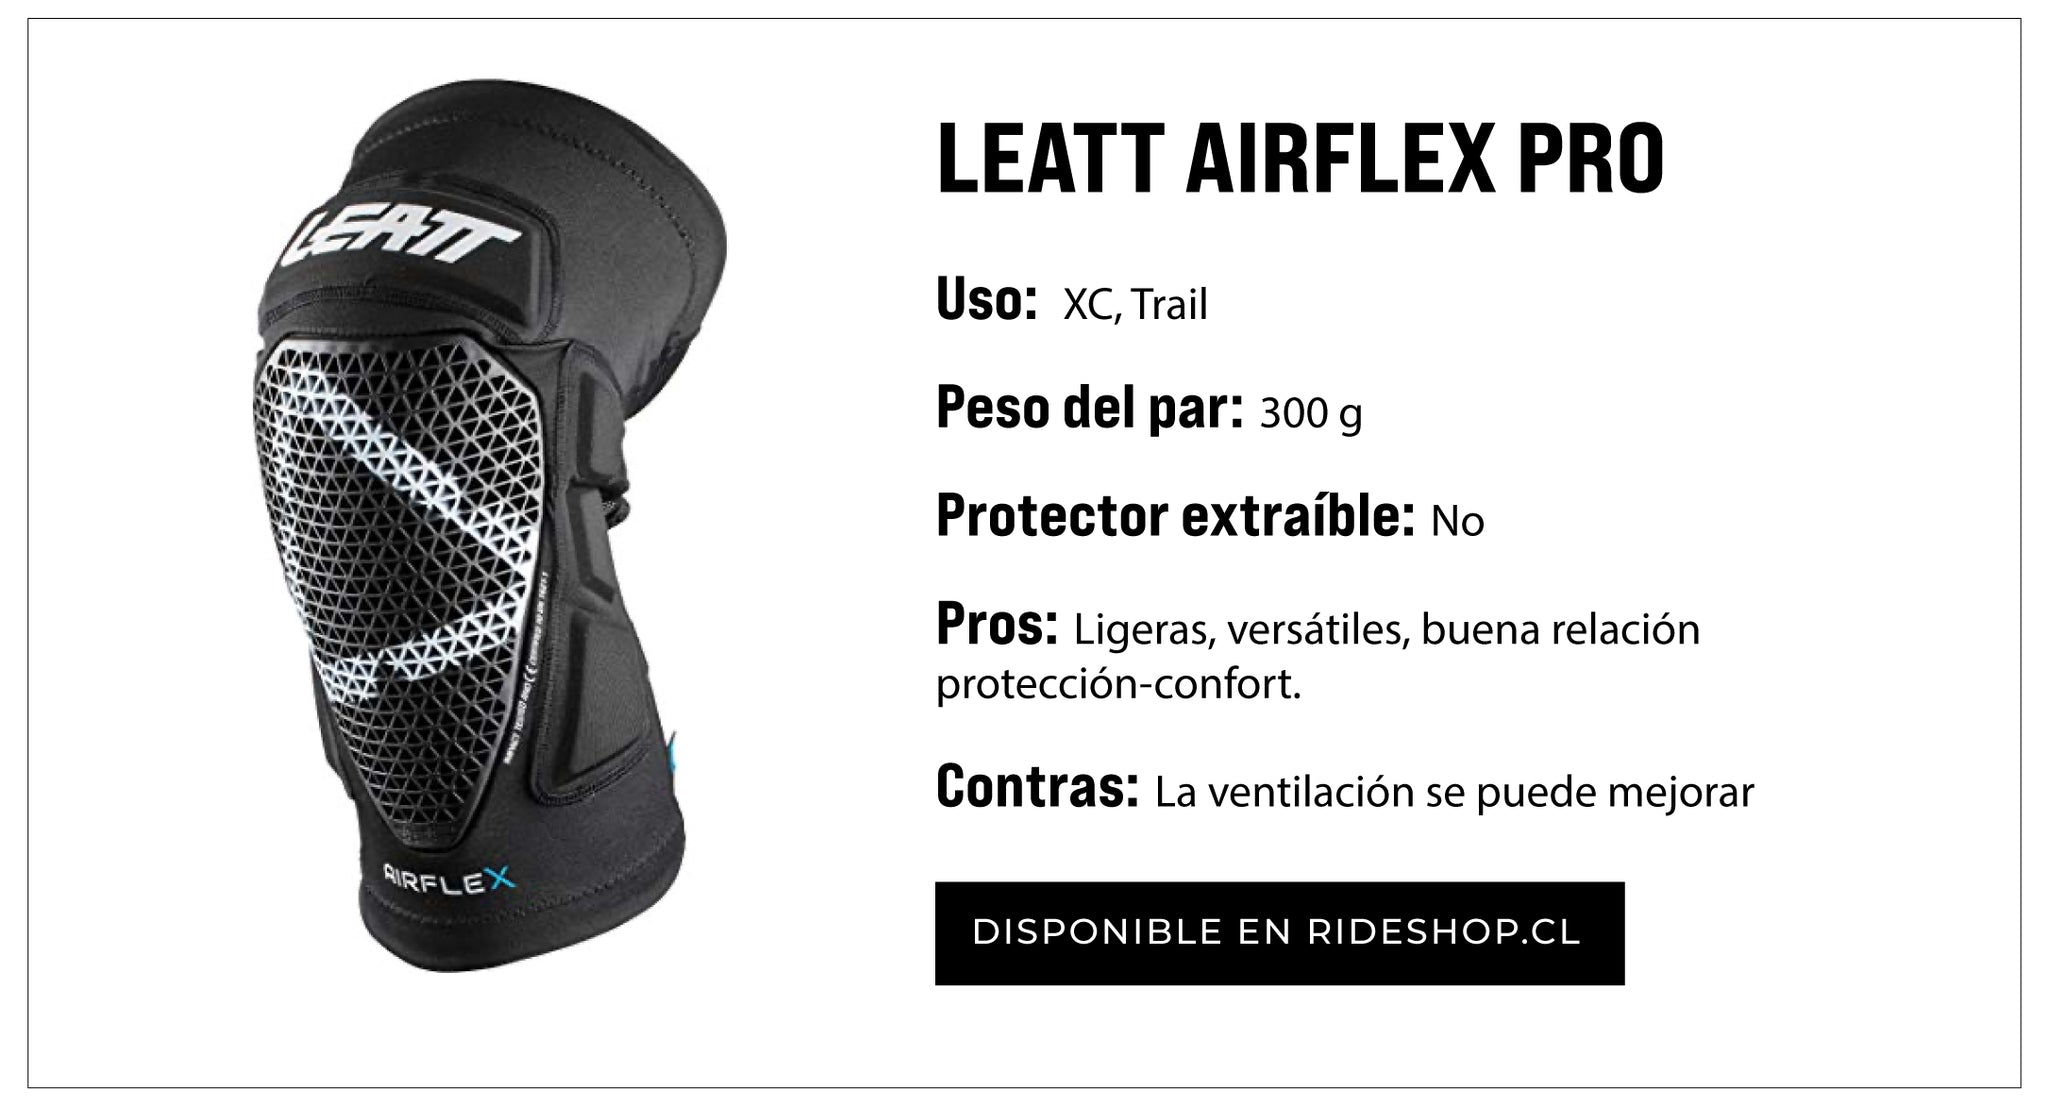 Leatt Airflex Pro